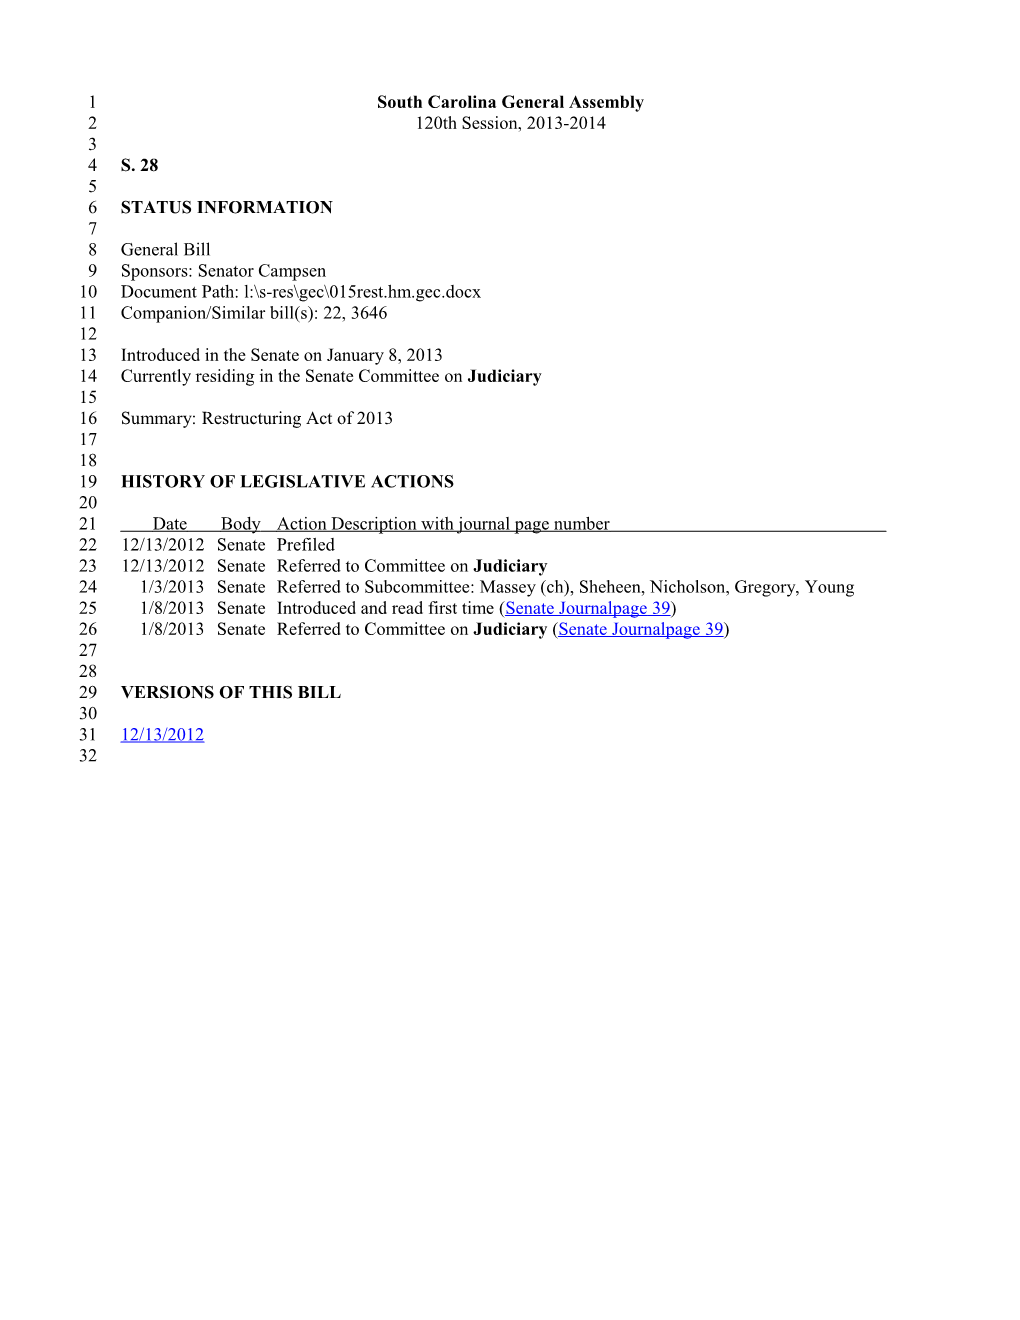 2013-2014 Bill 28: Restructuring Act of 2013 - South Carolina Legislature Online